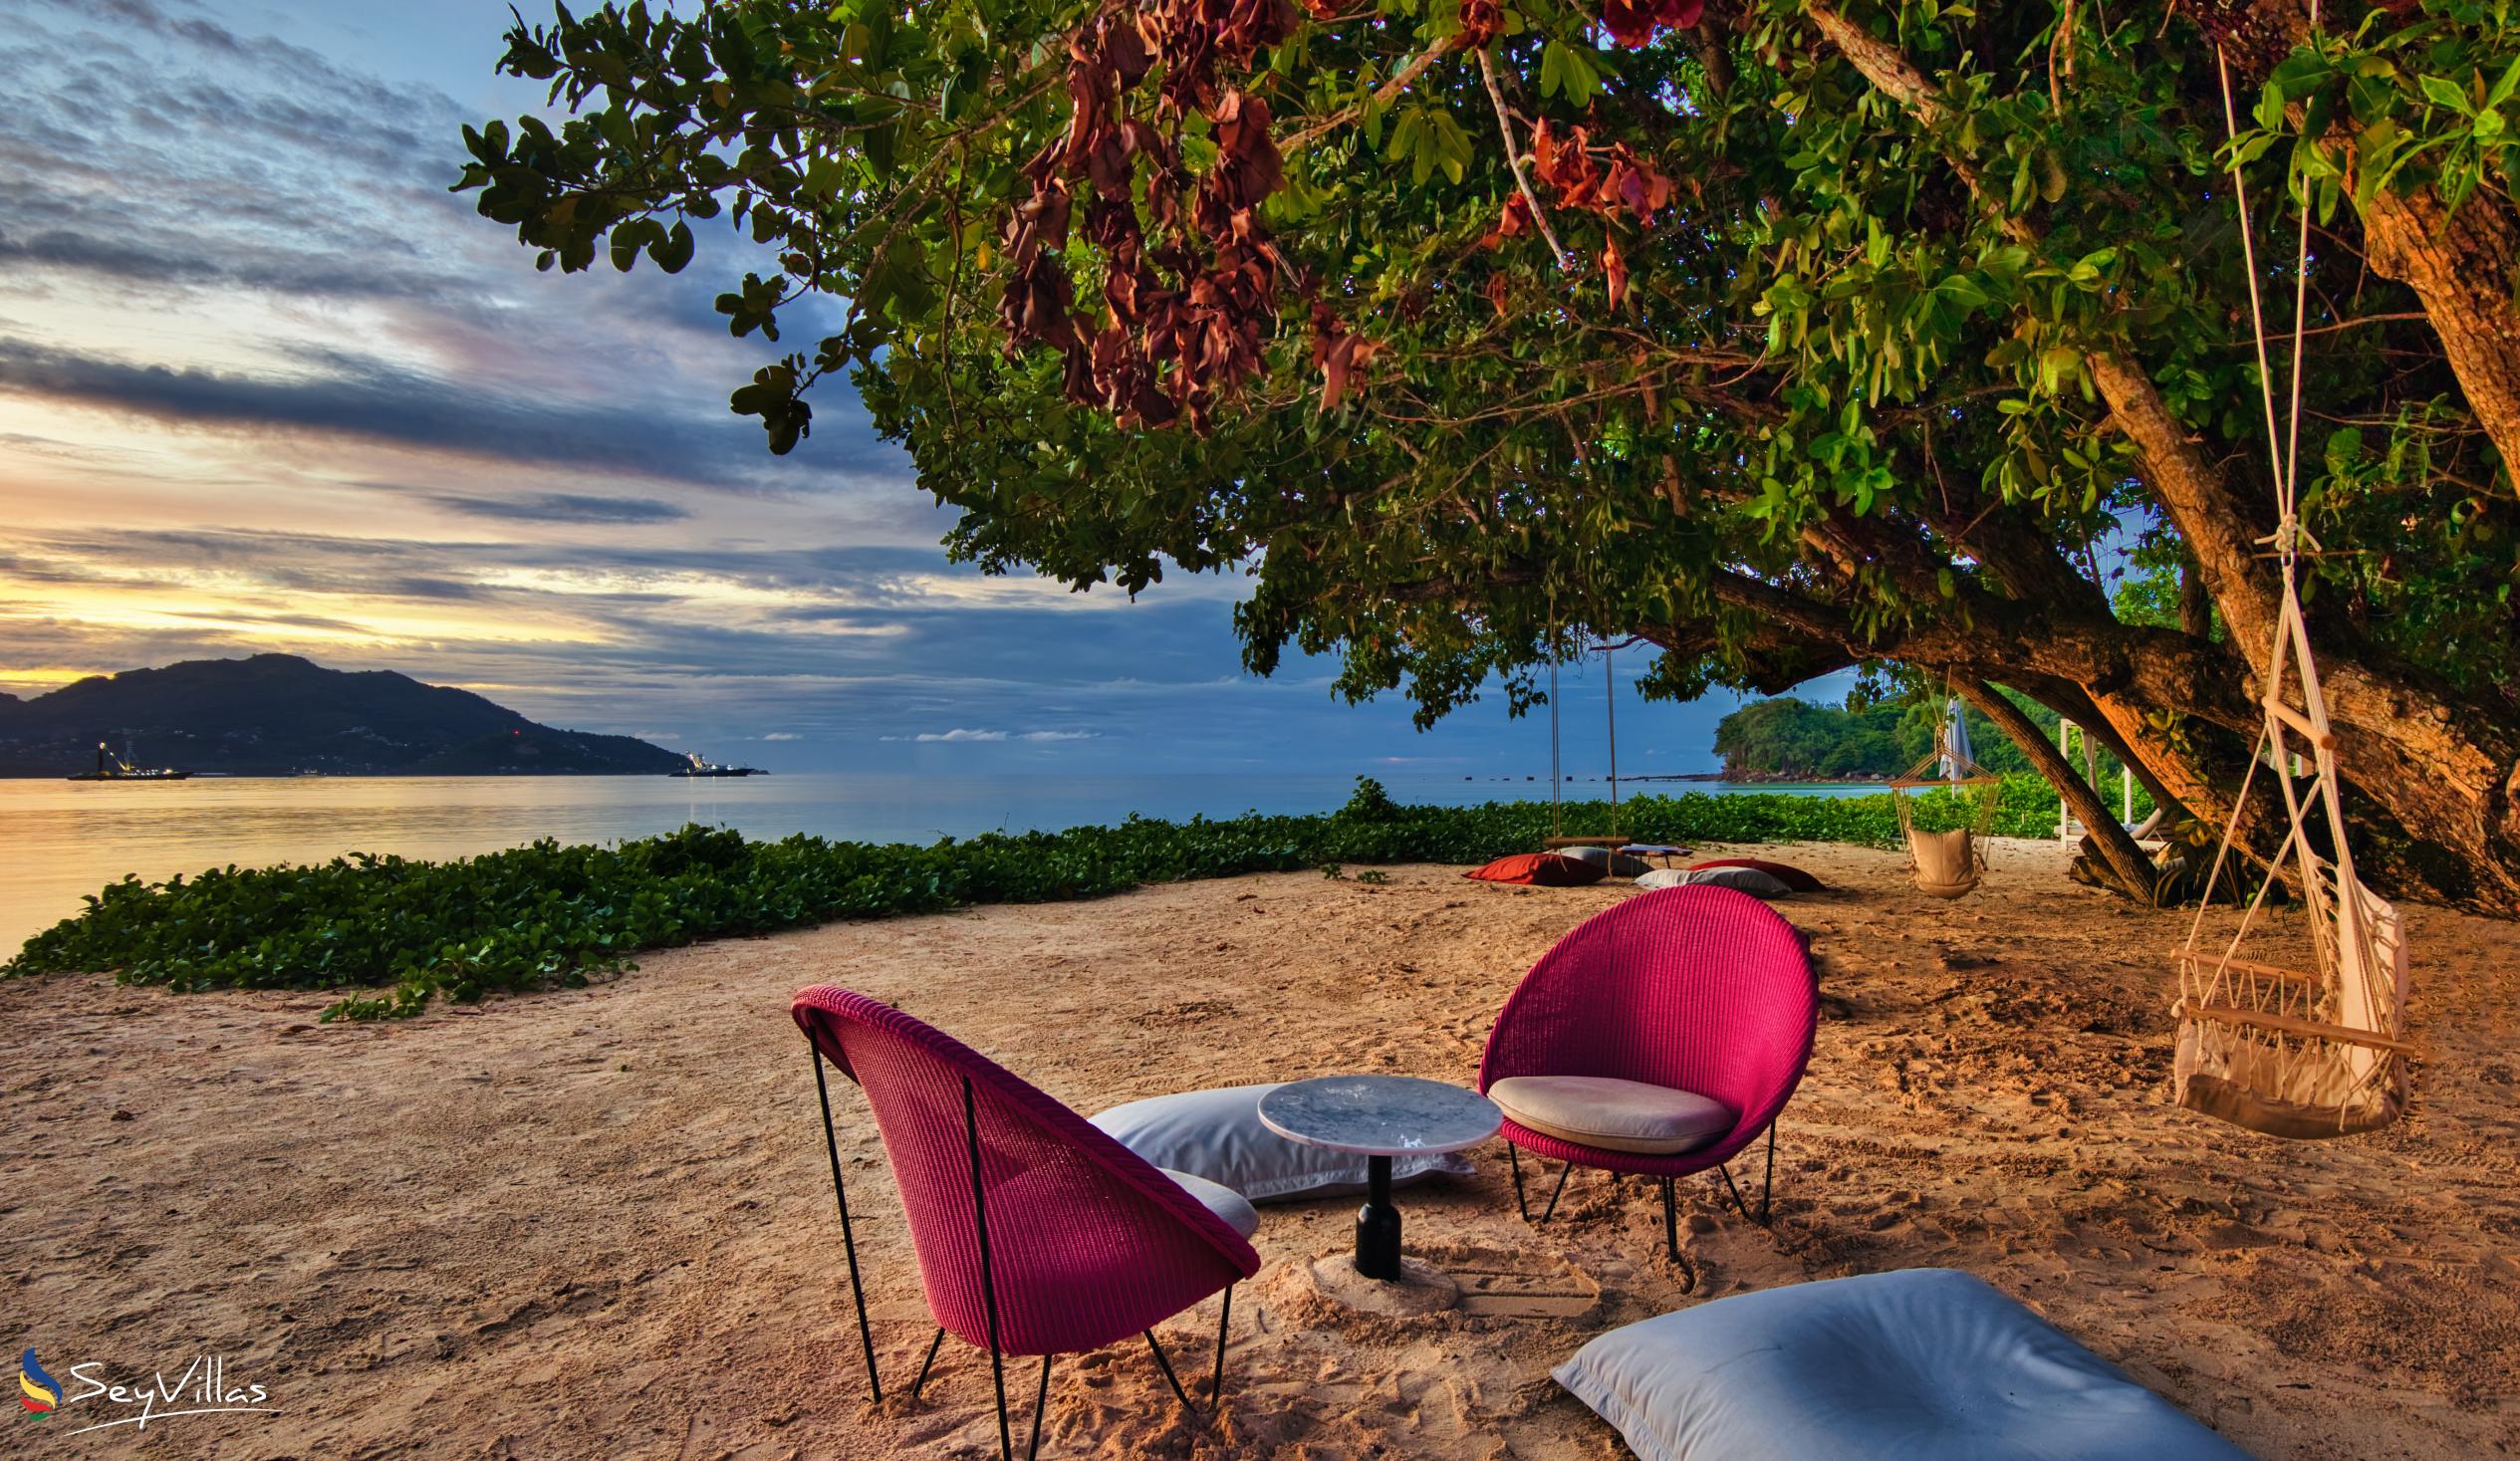 Foto 41: Club Med Seychelles - Location - Saint Anne (Seychelles)